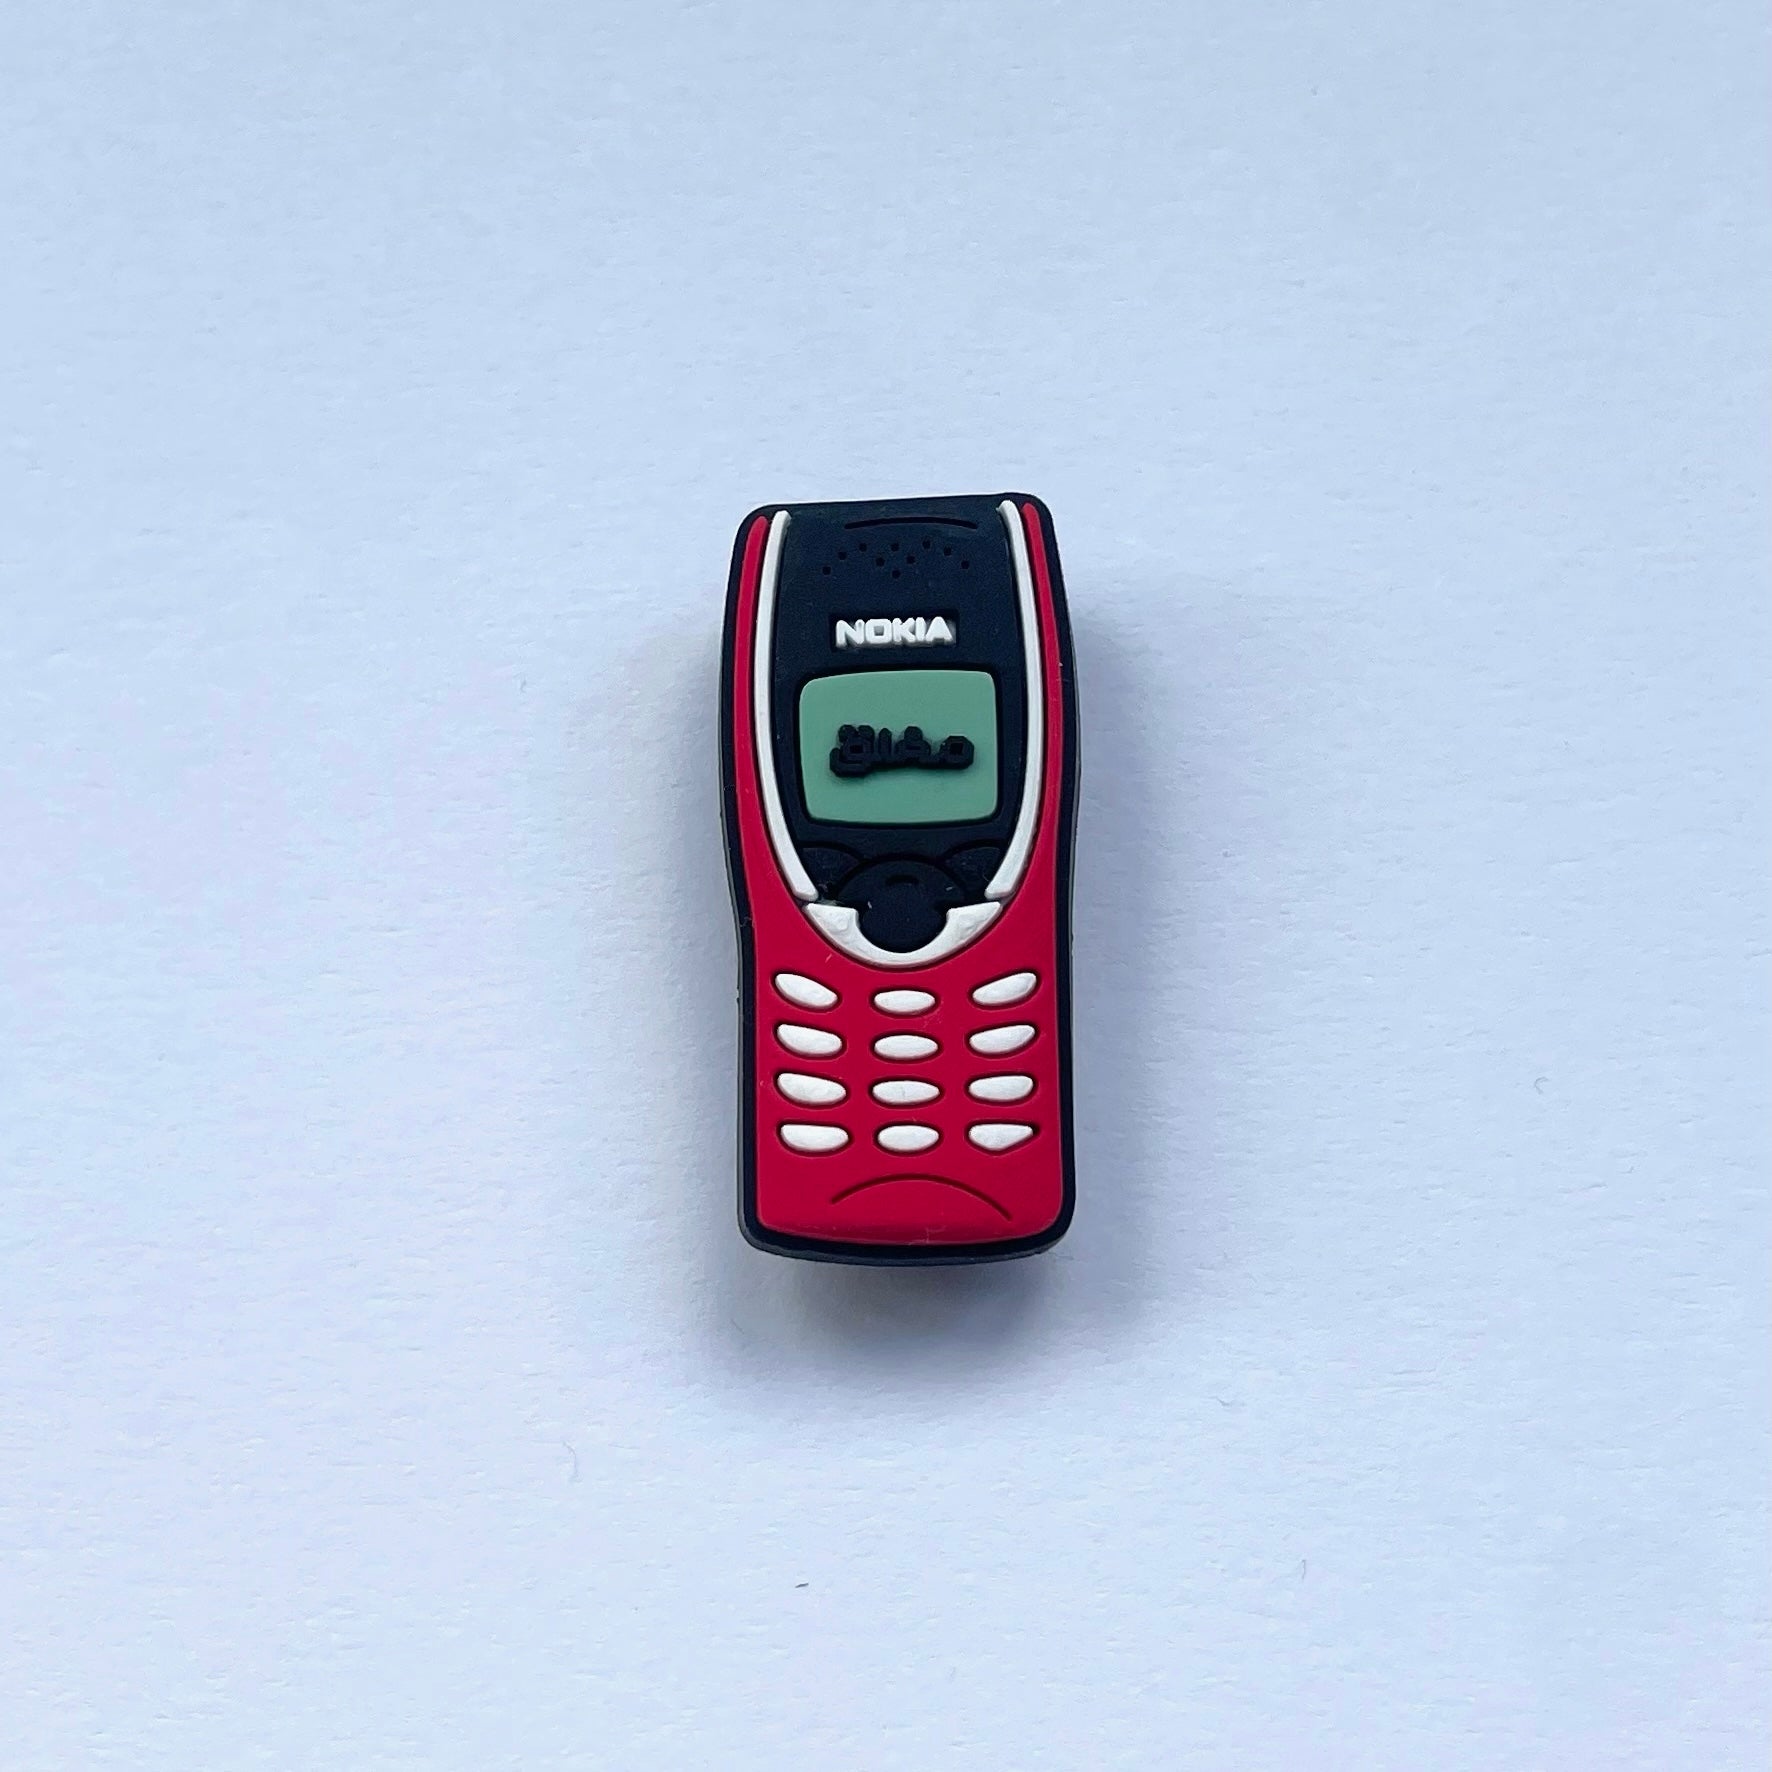 Nokia Cell Phone Charm